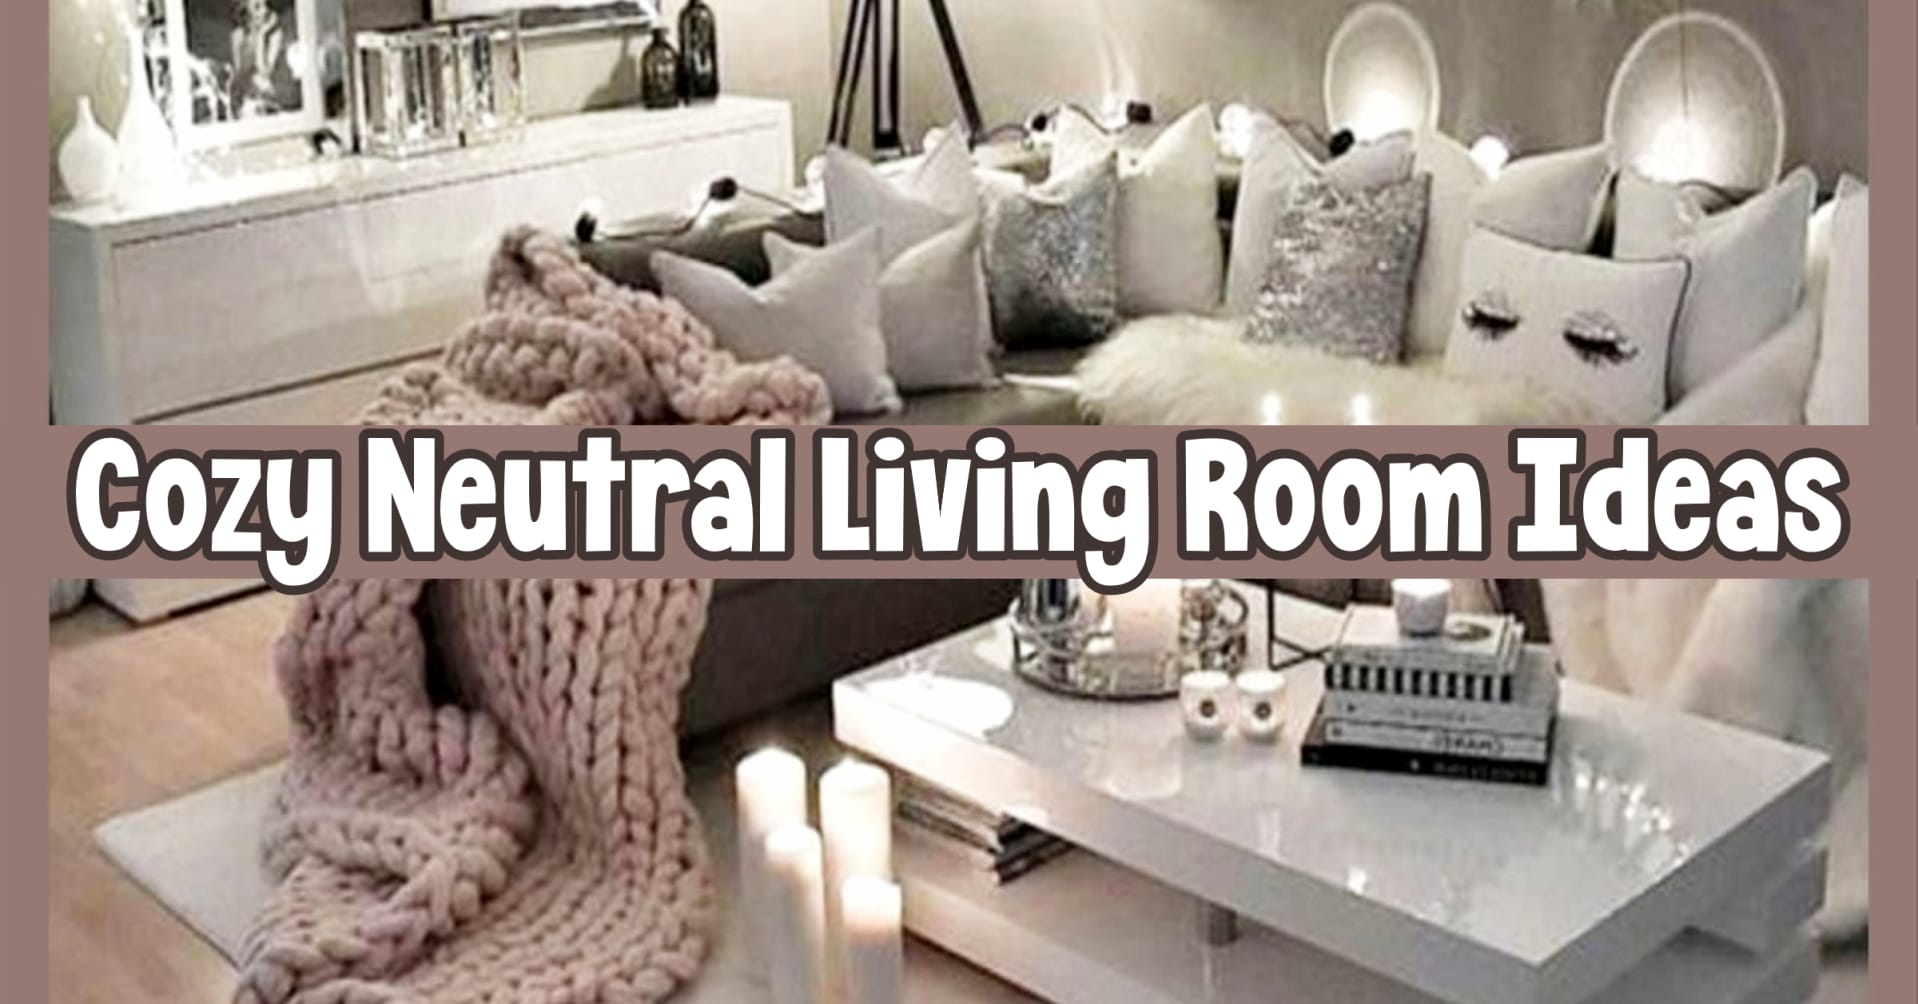 gray living room ideas - cozy neutral living room decorating ideas - gray earthy living room, den and family room decor ideas on a budget